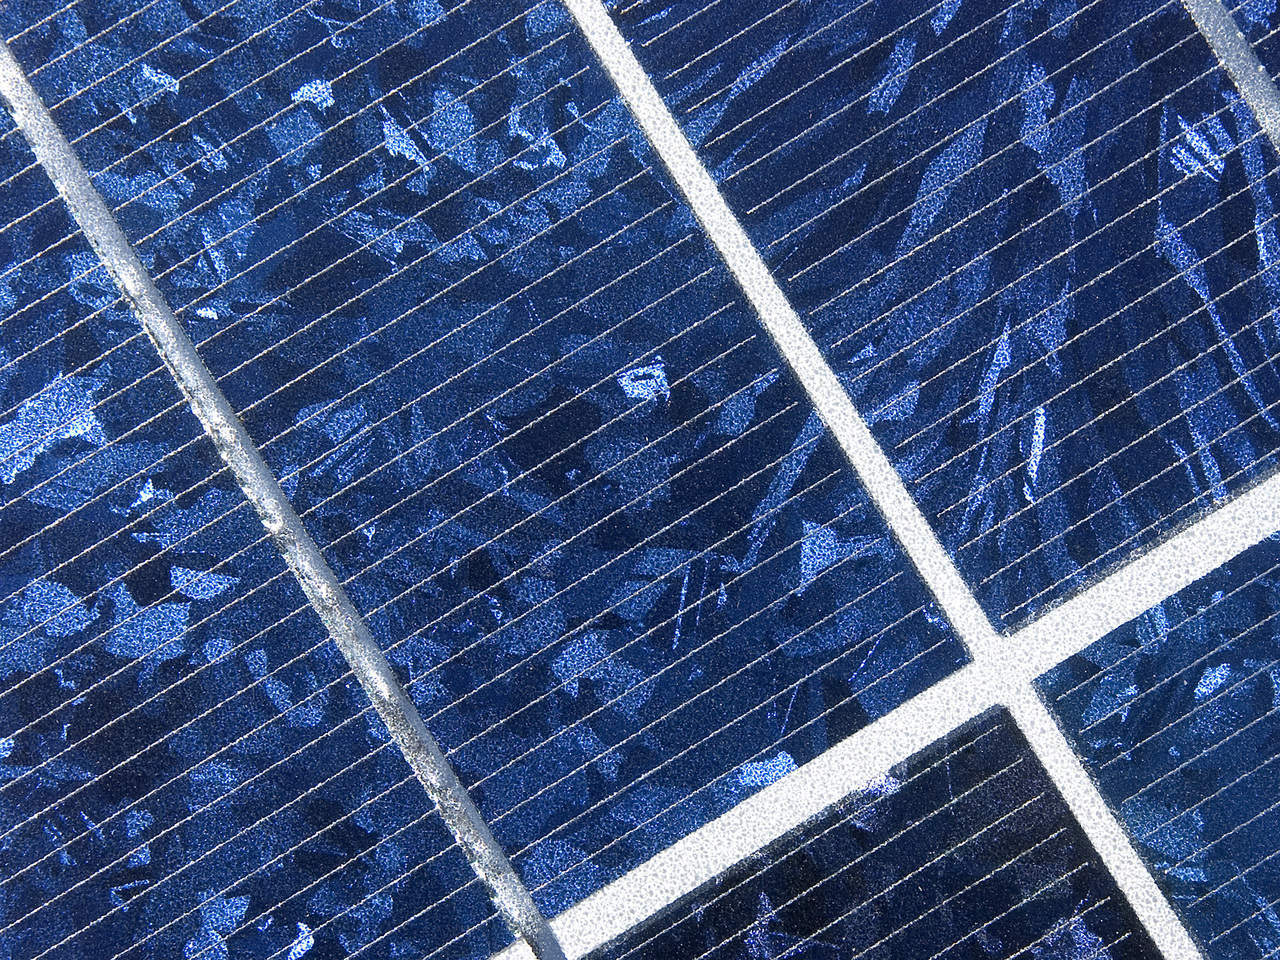 Green Power EMC, Silicon Ranch partner to build 194MW solar plants across Georgia